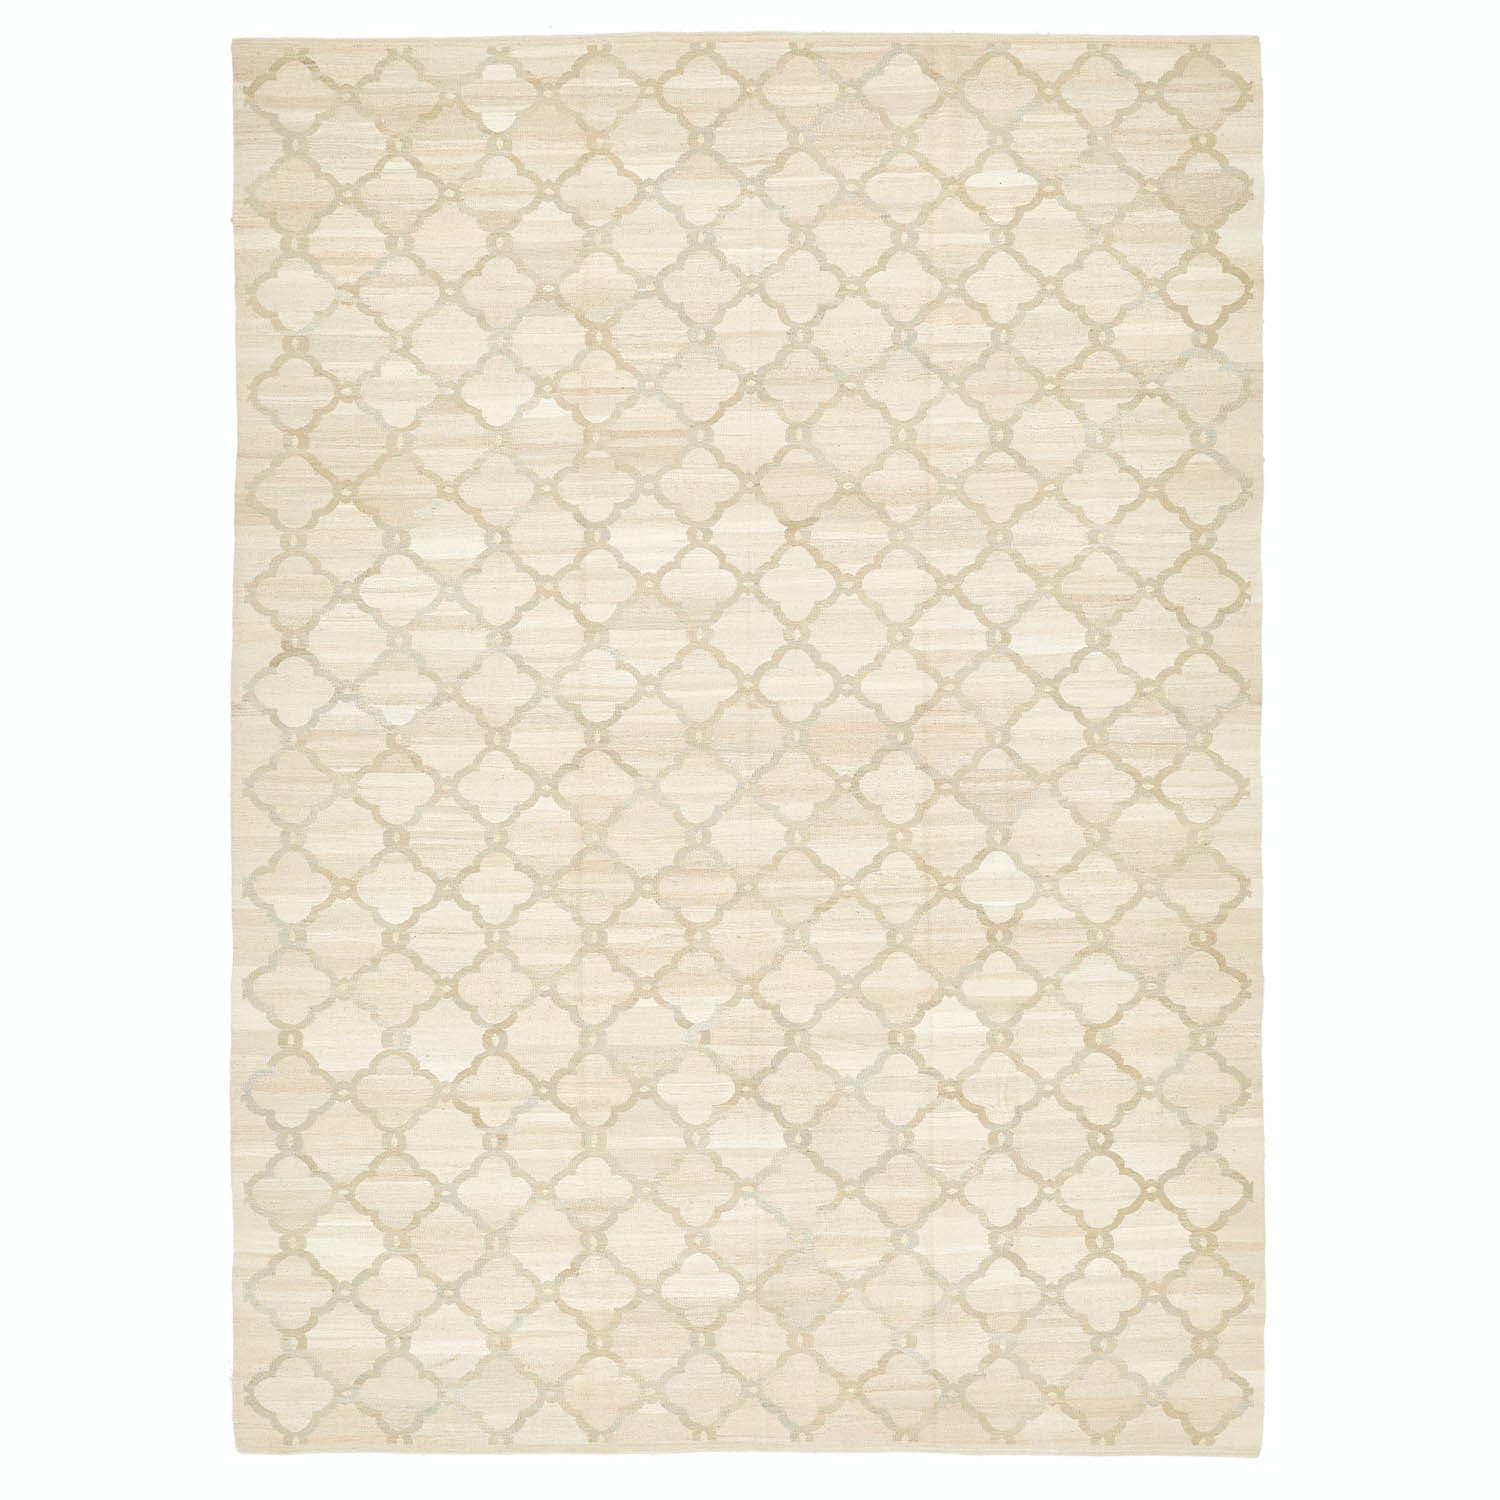 Geometric rug with neutral tones and borderless design showcased elegantly.